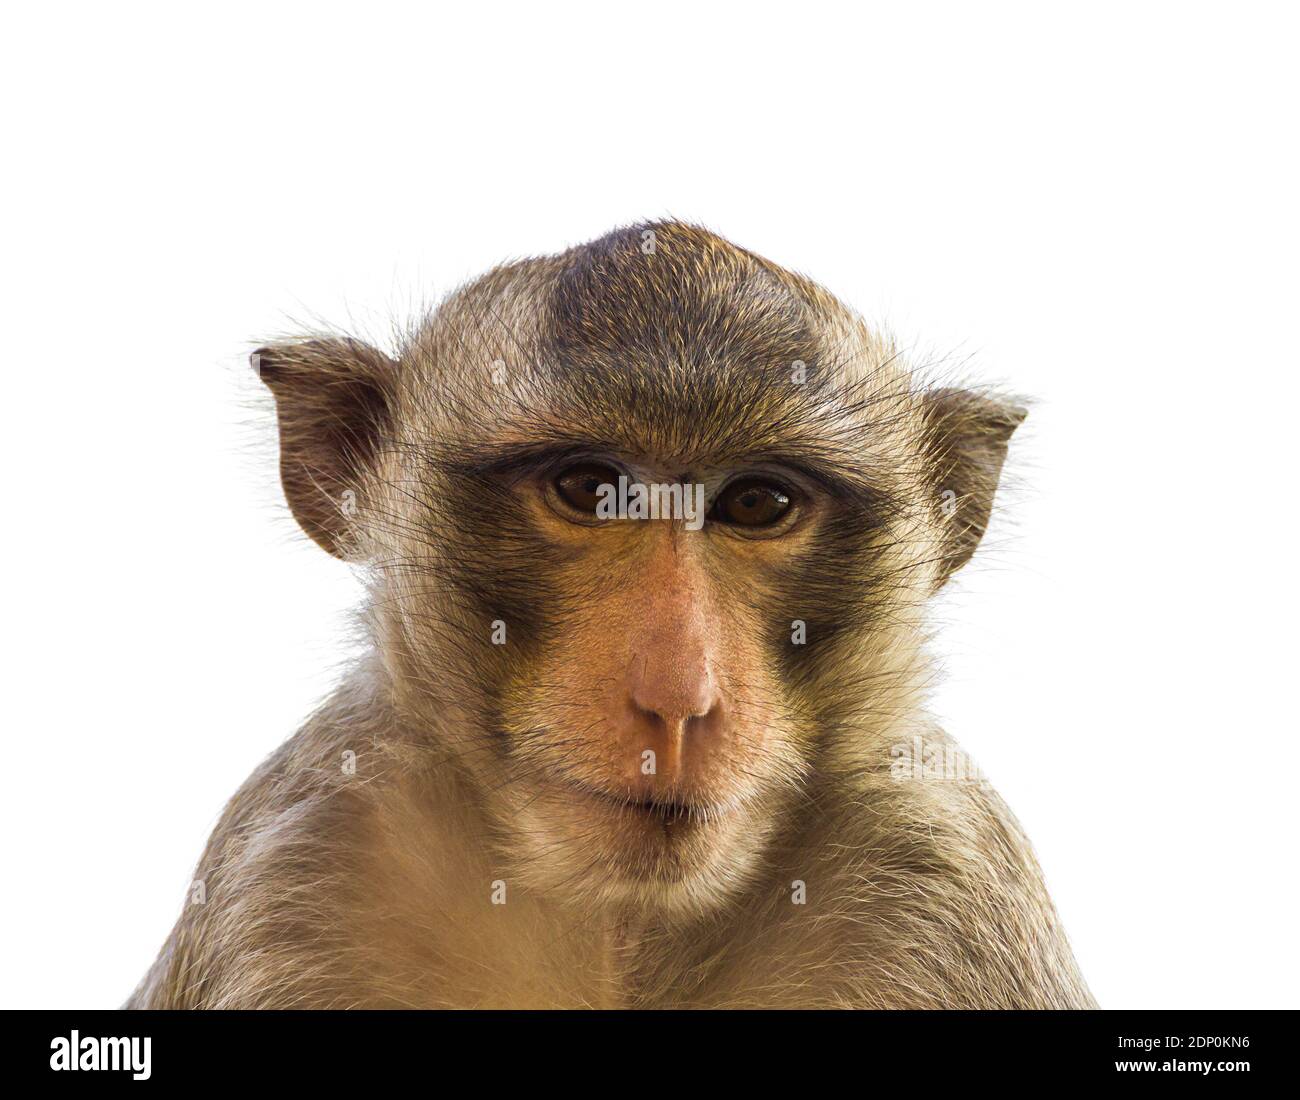 Portrait Of Monkey Against White Background Stock Photo - Alamy